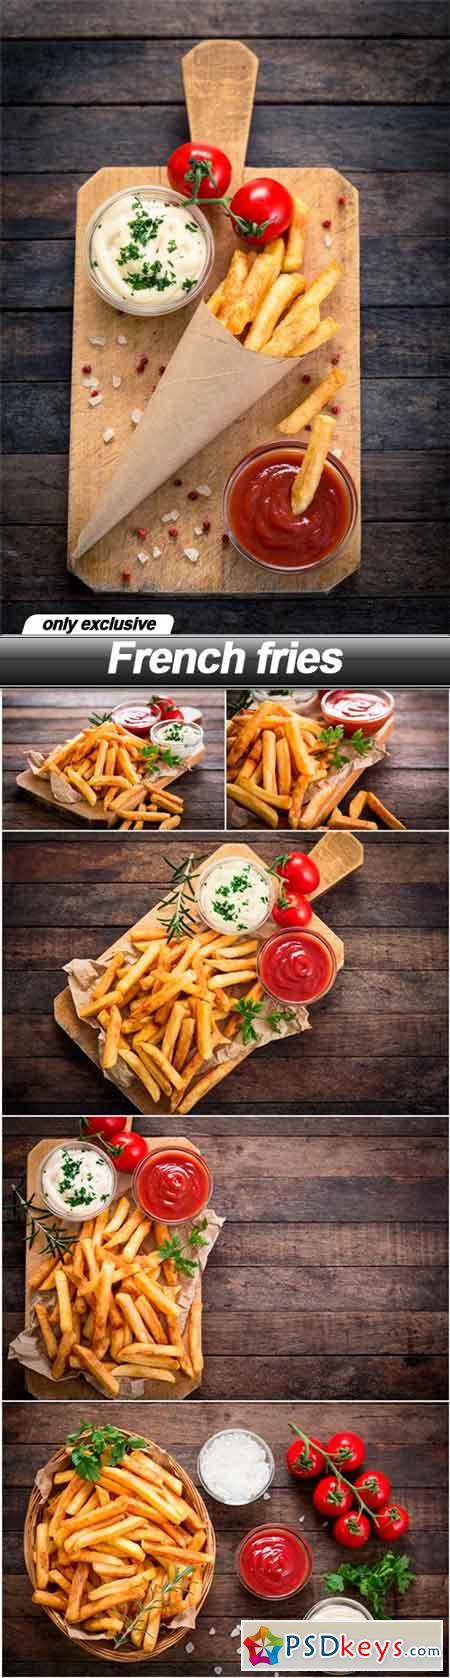 French fries - 6 UHQ JPEG